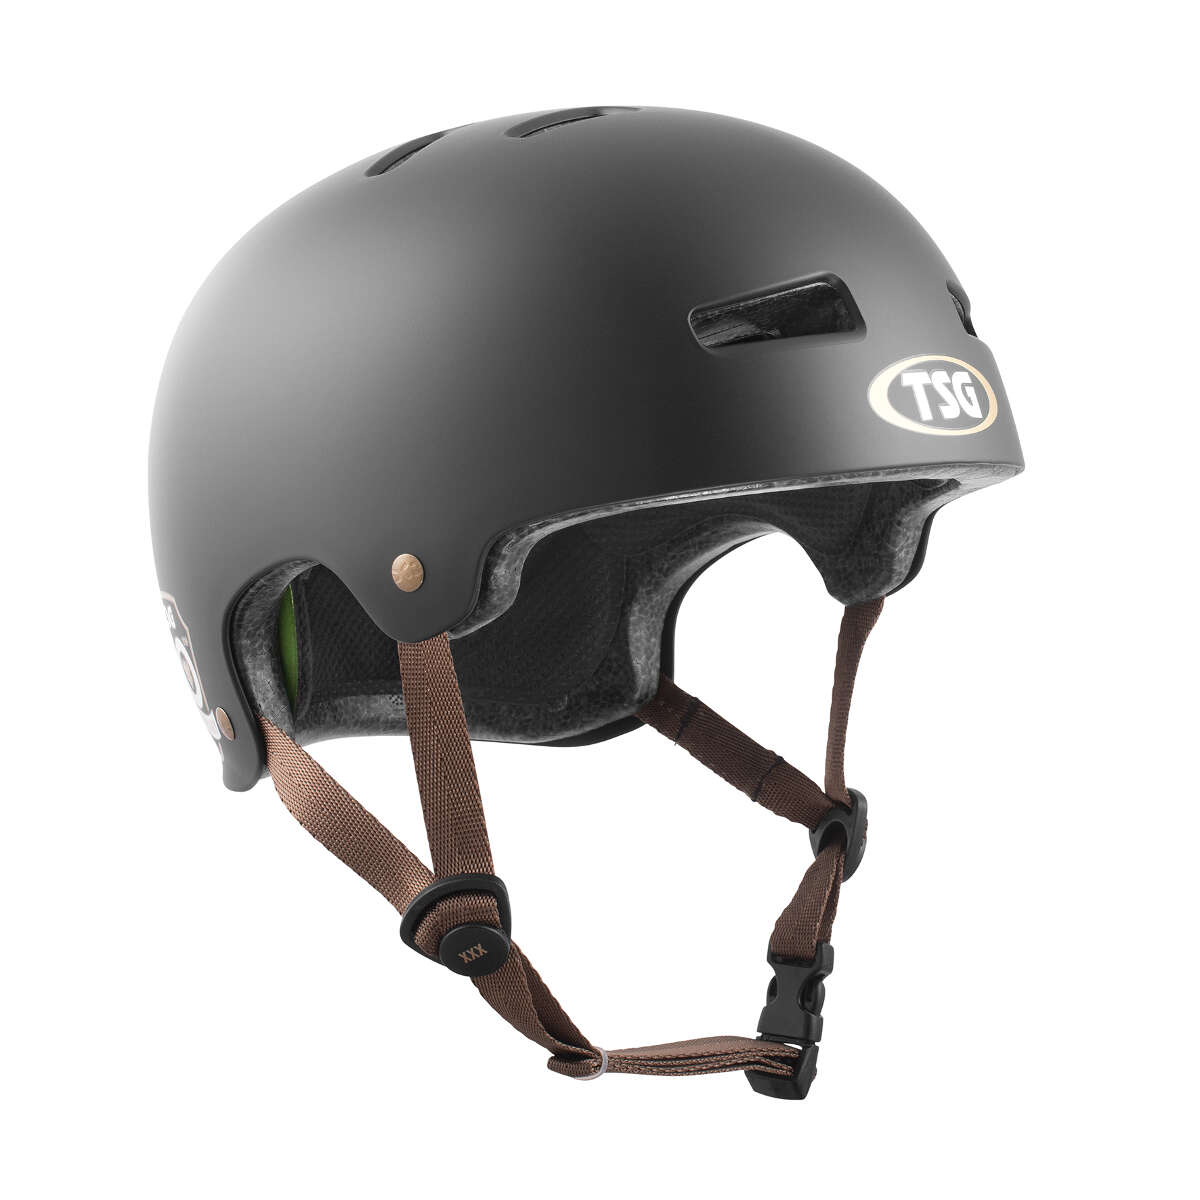 TSG BMX/Dirt Helmet Evolution Limited Edition - 30th Anniversary